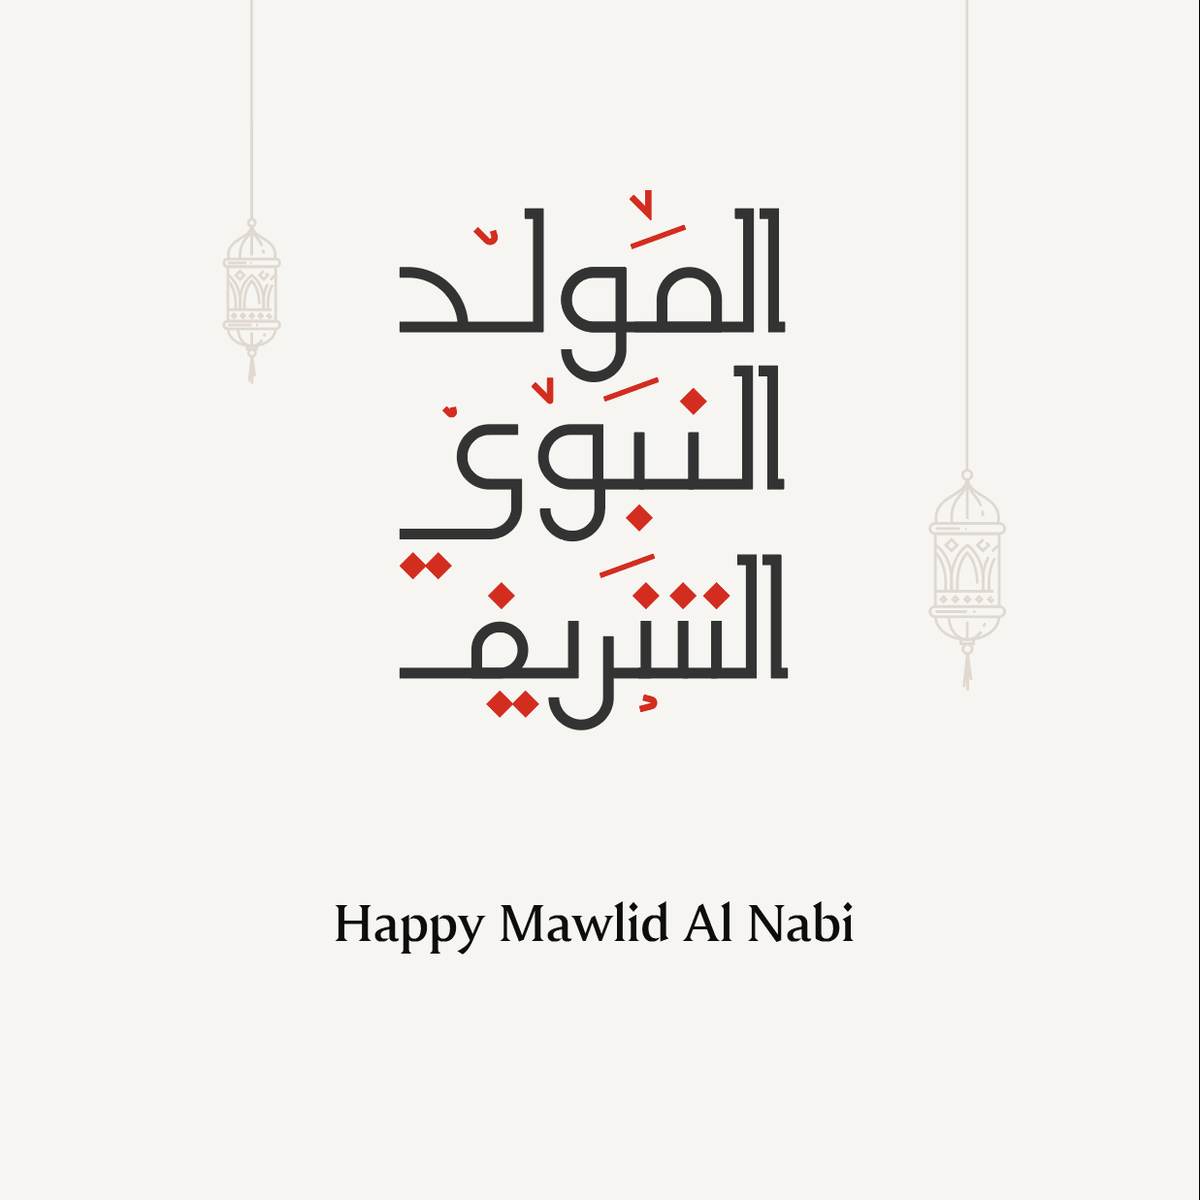 Celebrating Mawlid Al Nabi with prayers for good health, peace, and happiness for all. 🙏✨ 

#mawlidalnabi #finestrealestate #dubairealestate #engelvoelkers #evdubai #mydubai